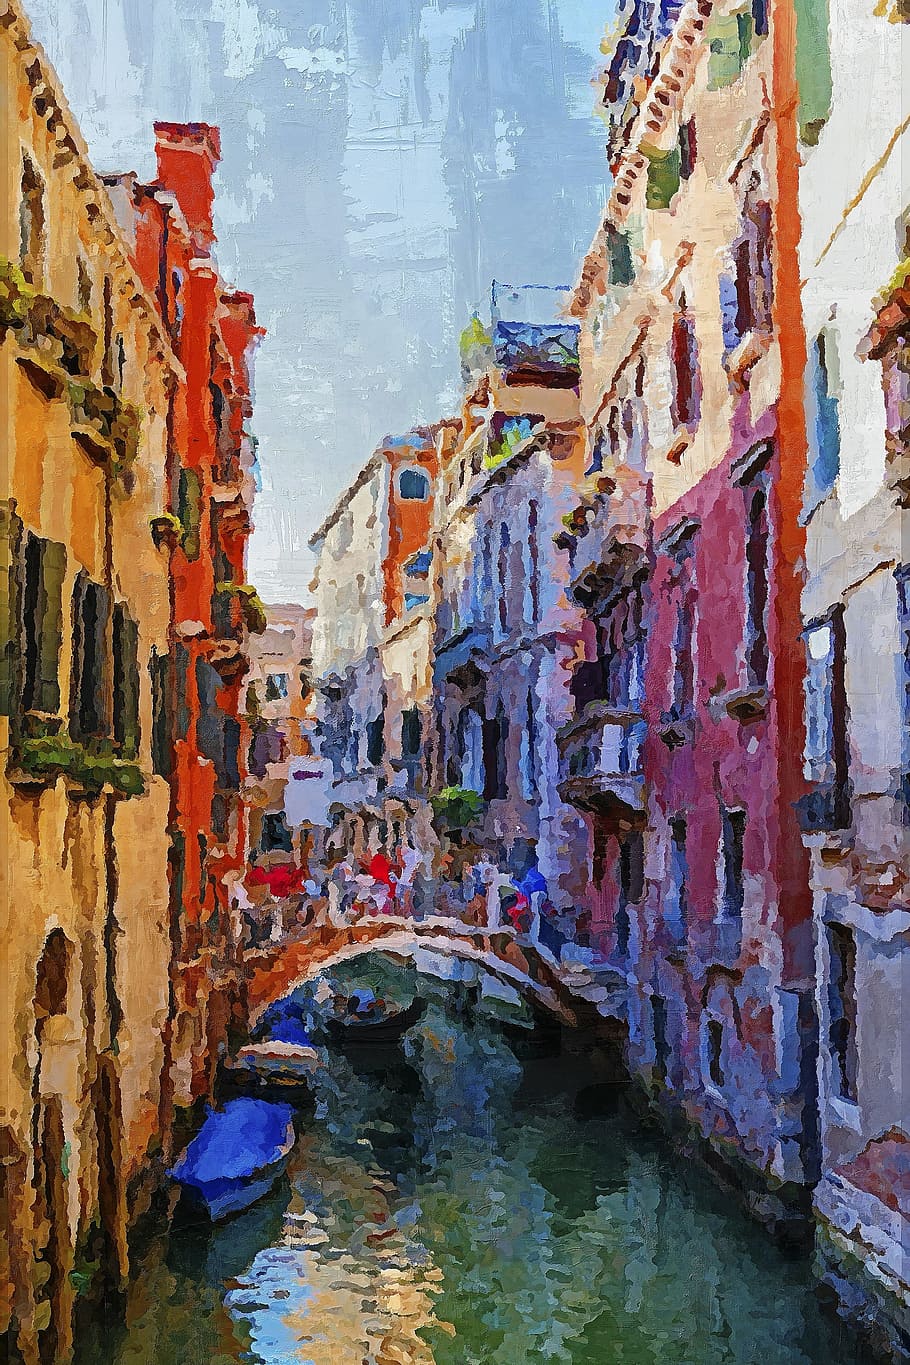 multicolored, city buildings painting, venice, italy, canal, bridge, gondola, sky, outdoors, europe